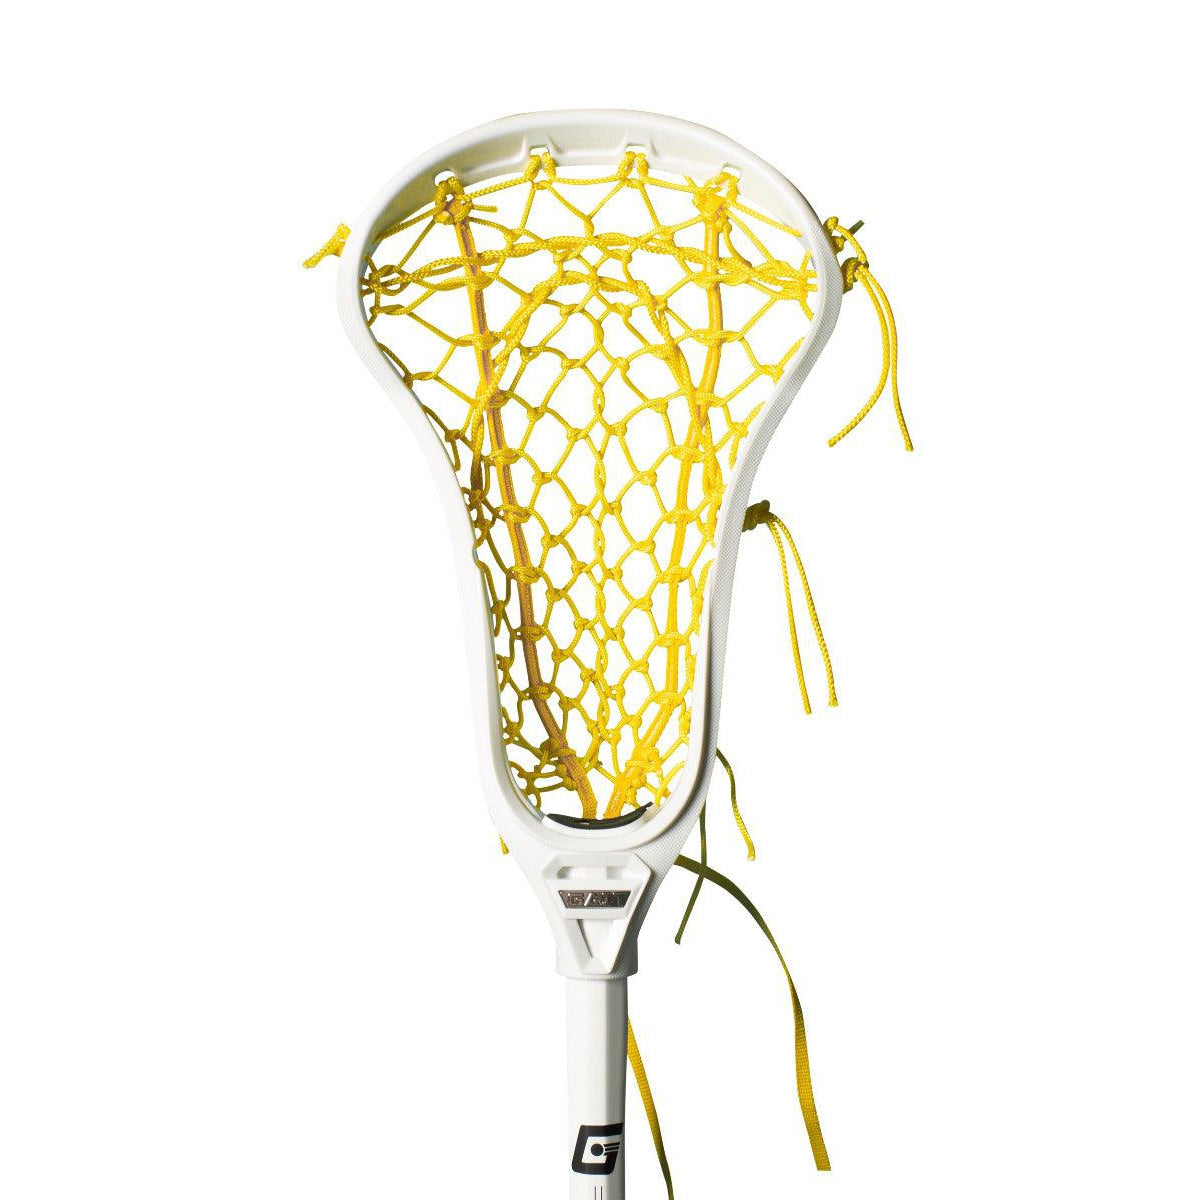 Gait Air 2 Complete Stick-Universal Lacrosse